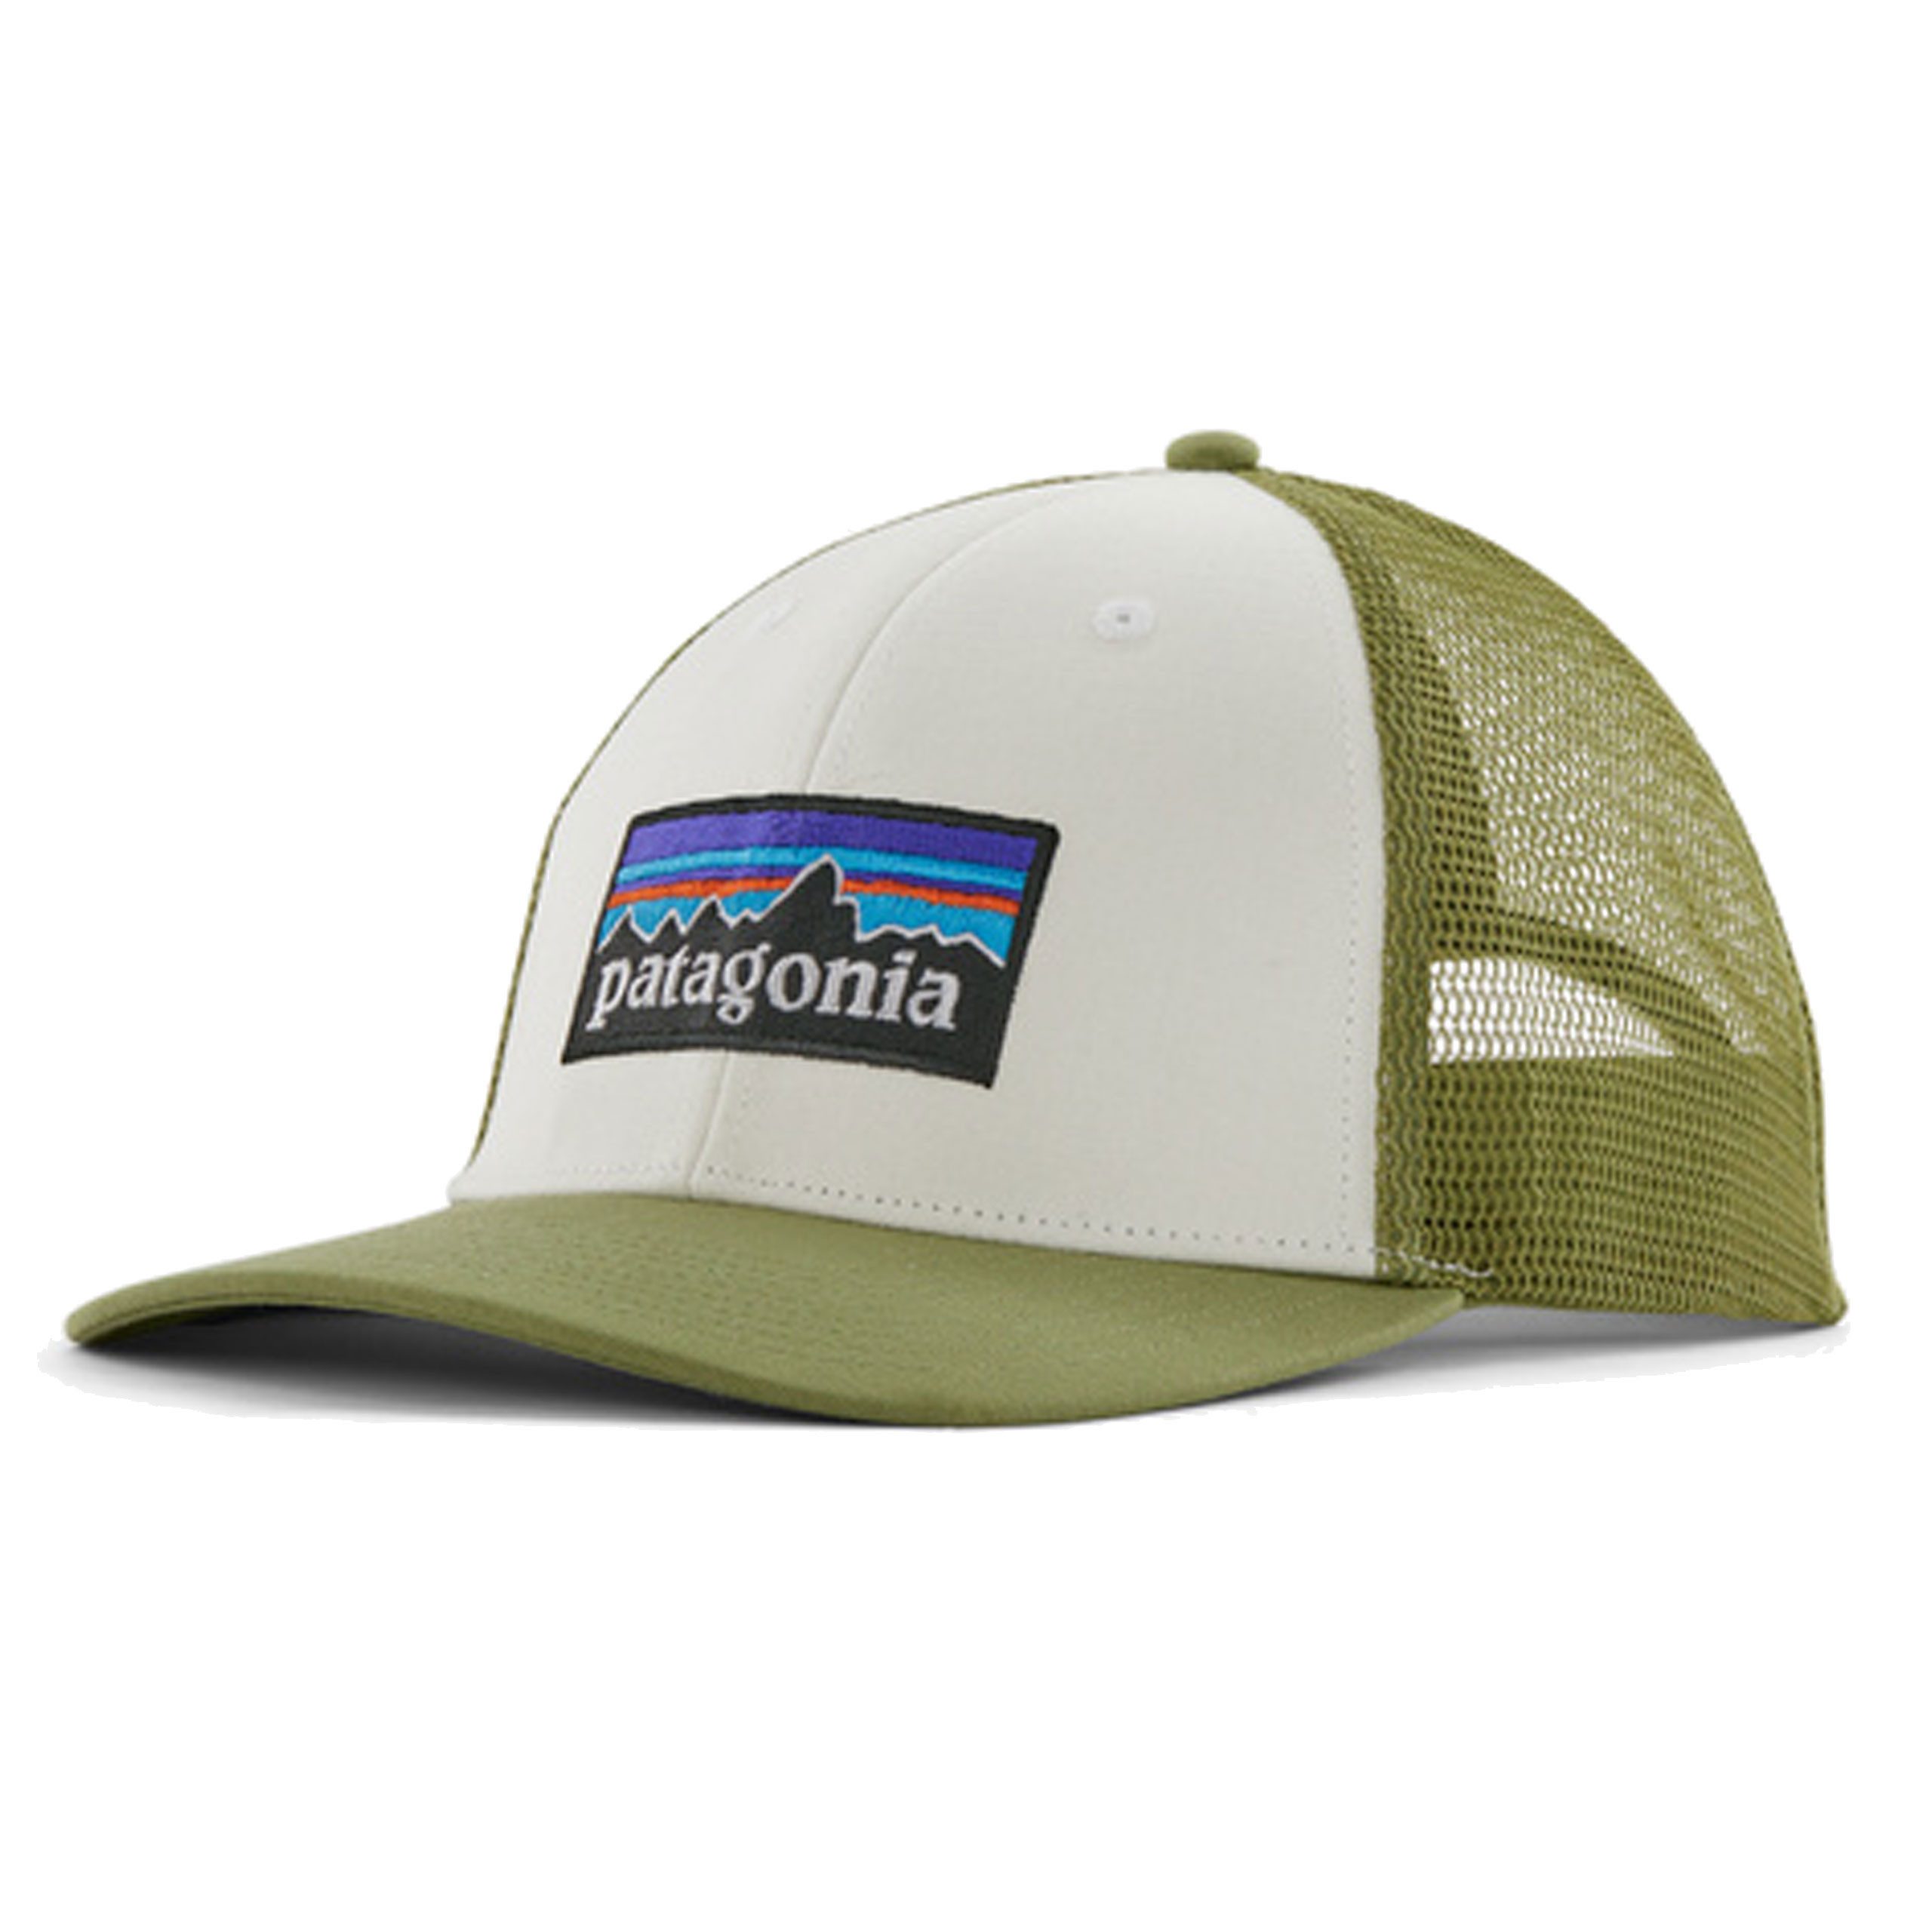 Patagonia Baseball Cap Patagonia P-6 Logo Lopro Trucker Hat - luftdurchlässige Truckercap